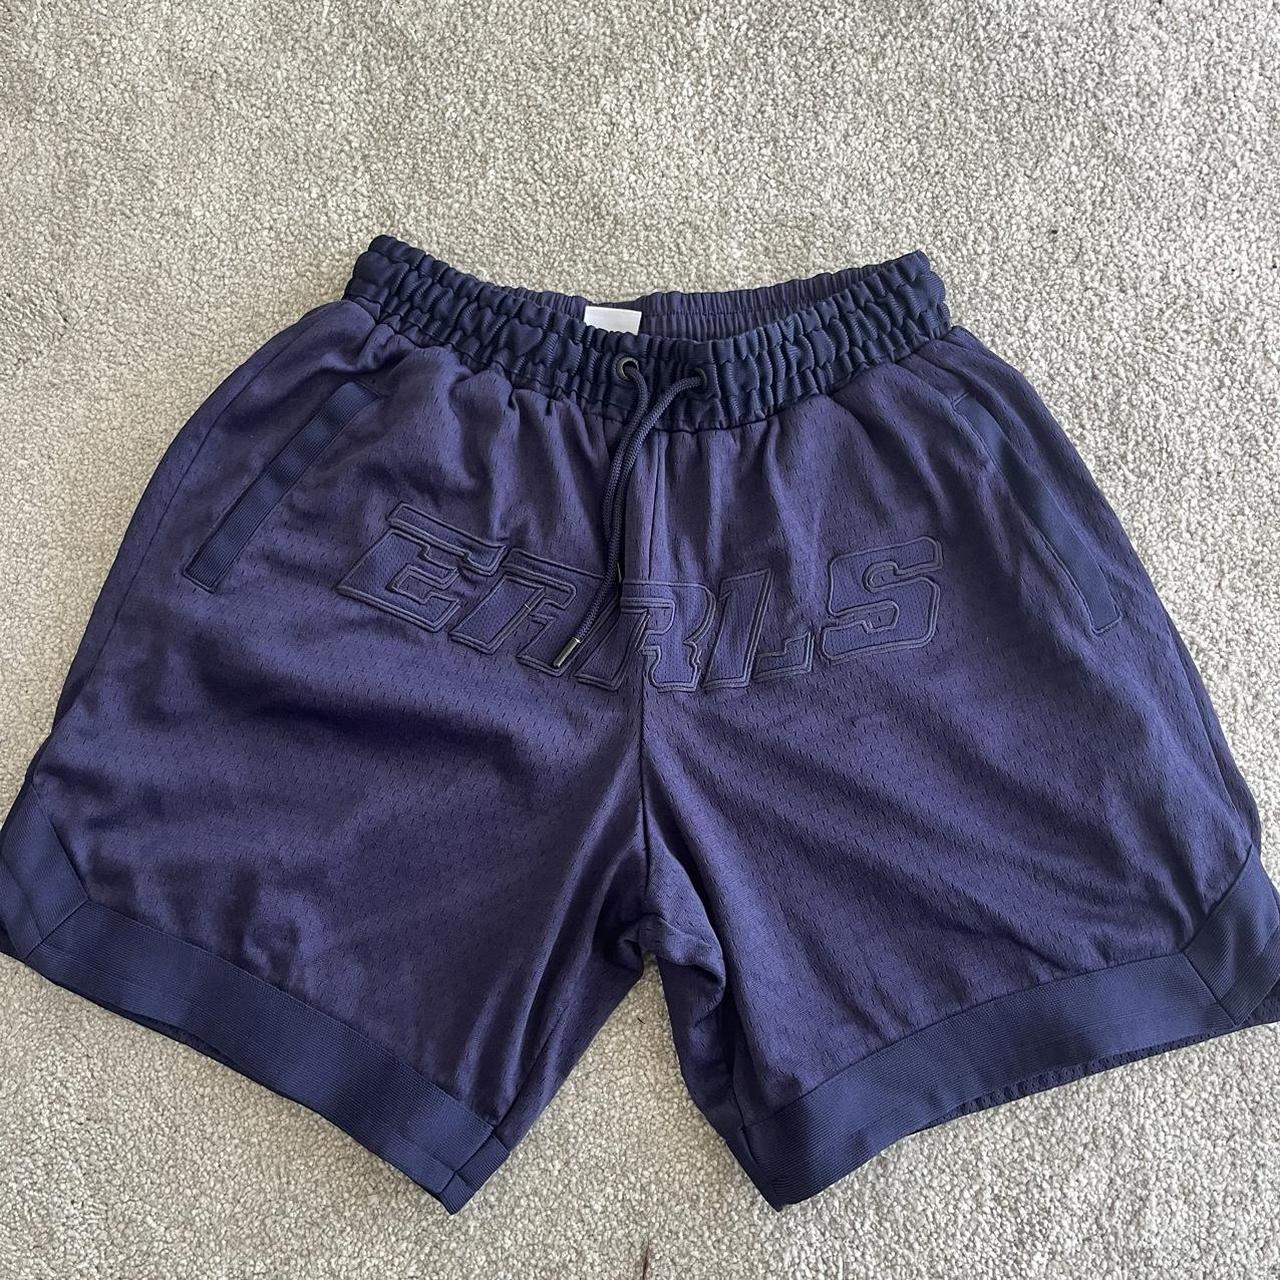 Earls shorts - Depop